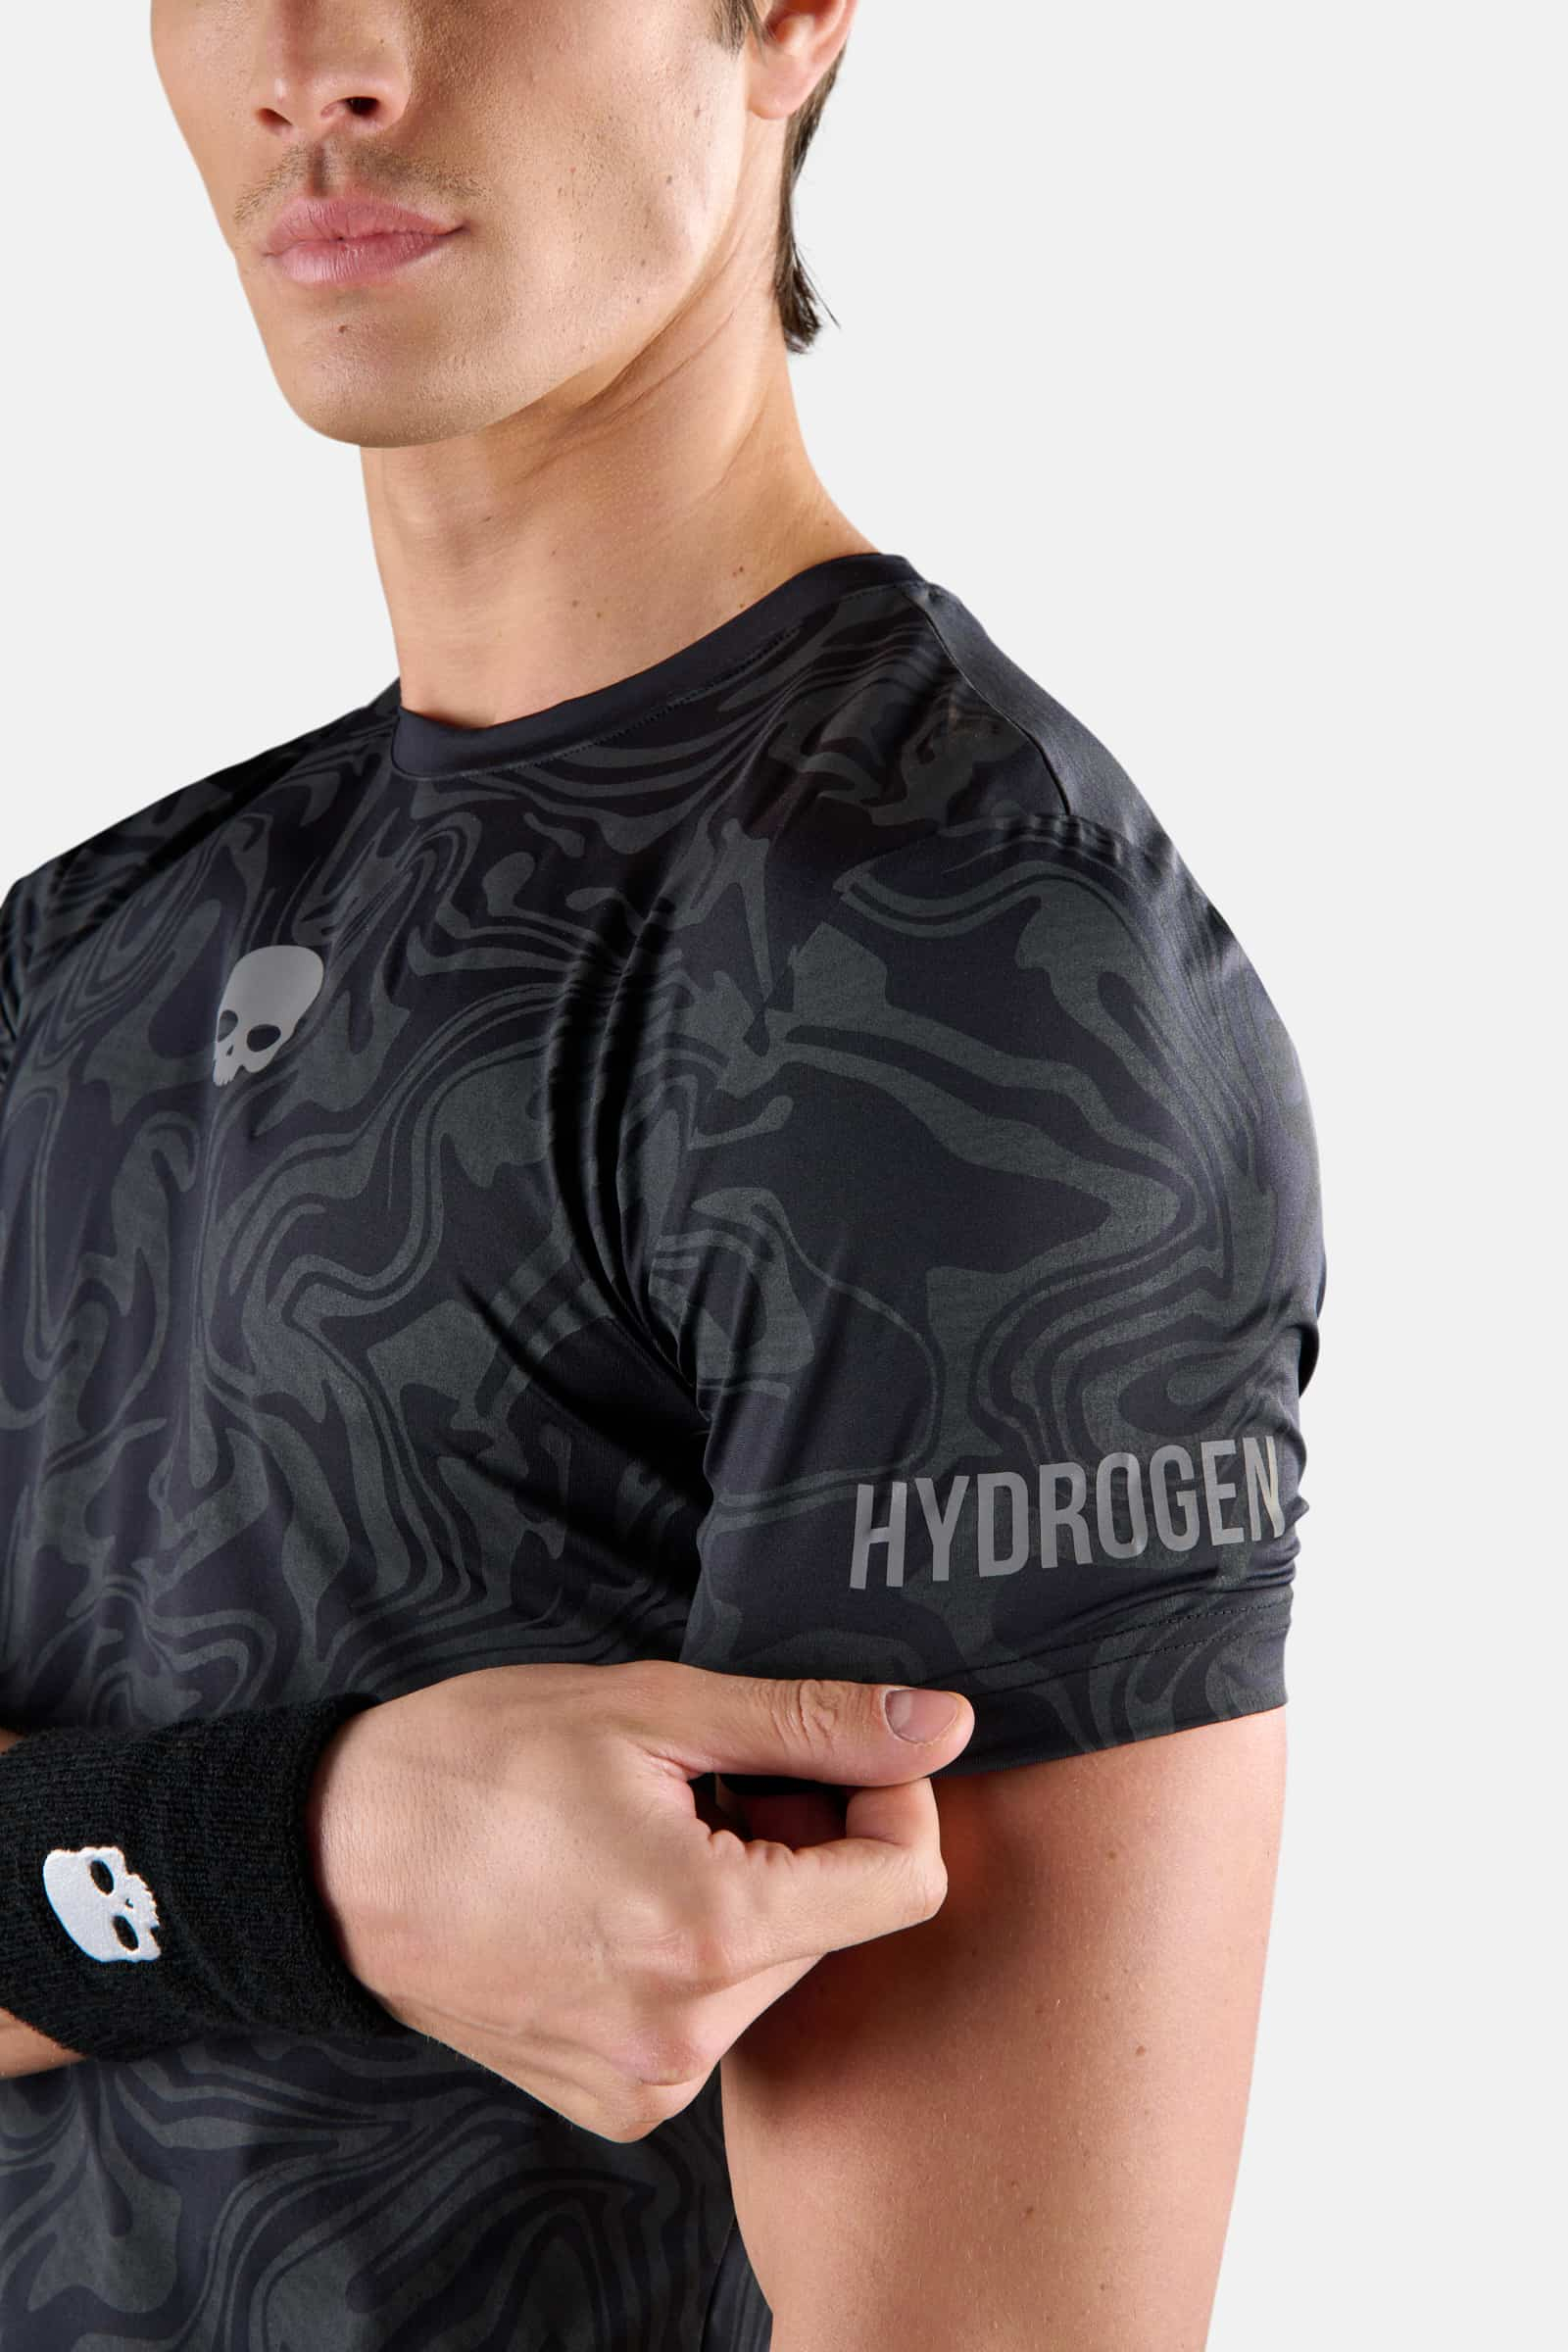 T-SHIRT TECNICA CHROME - GREY - Abbigliamento sportivo | Hydrogen